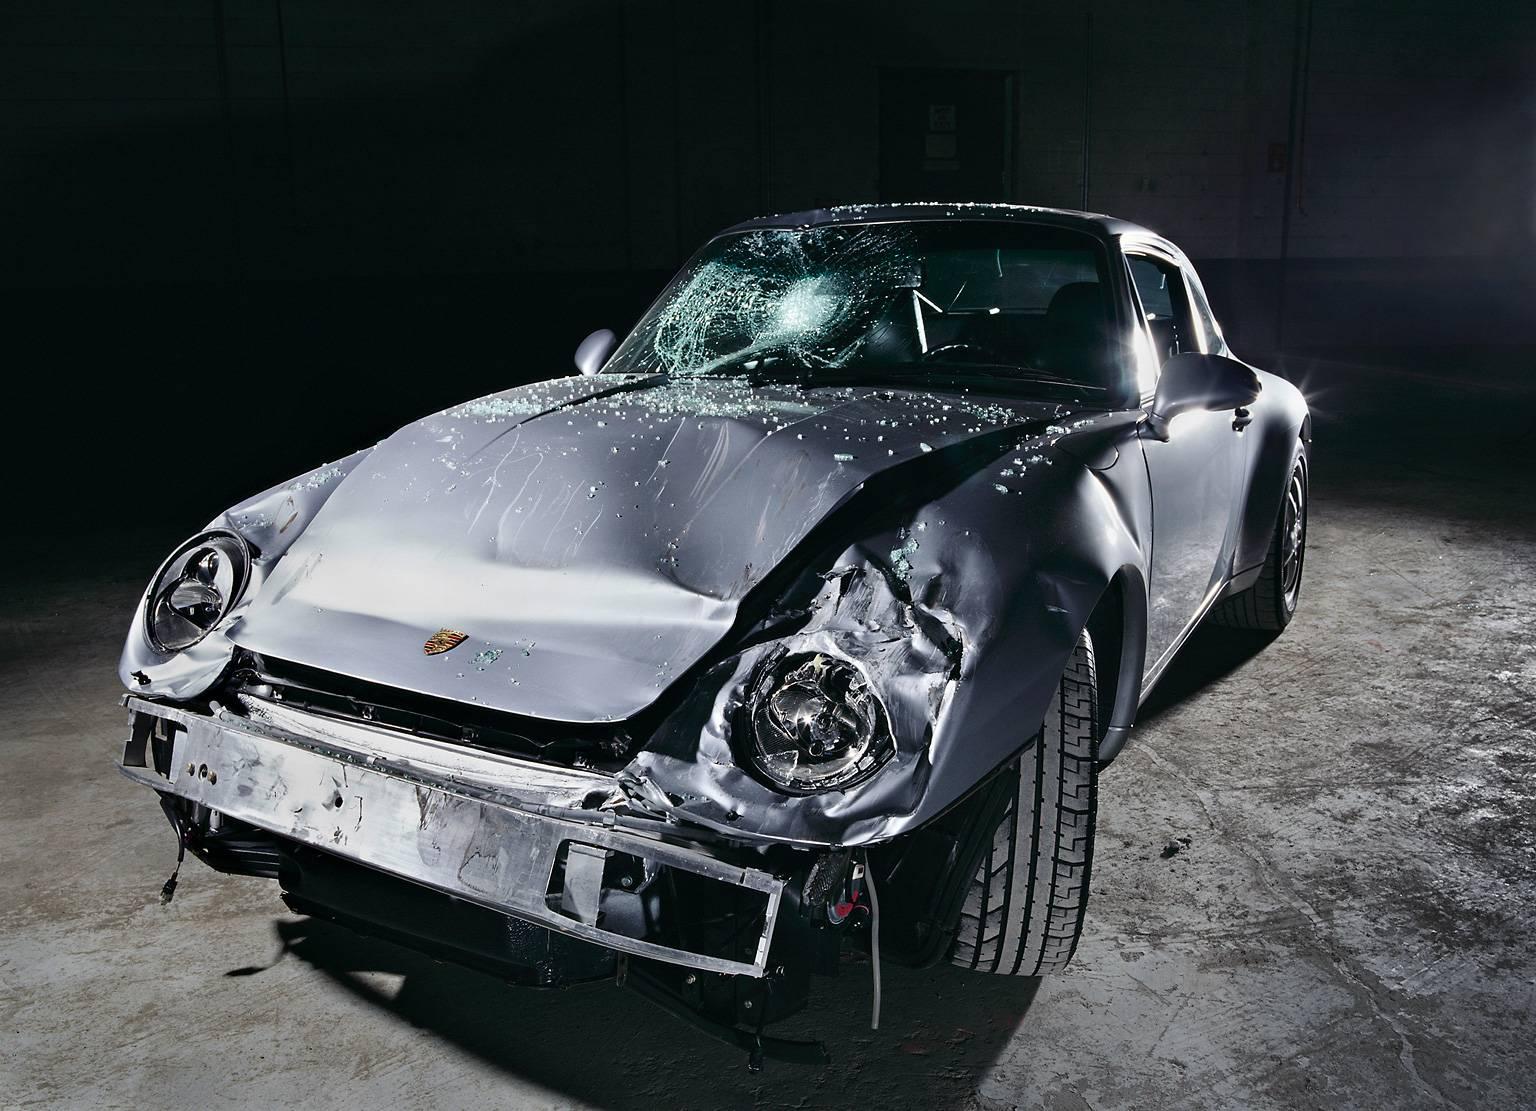 Frank Schott Color Photograph – NINE-ONE-ONE (Porsche 911) – großformatige Studiofotografie eines verunglückten Autos